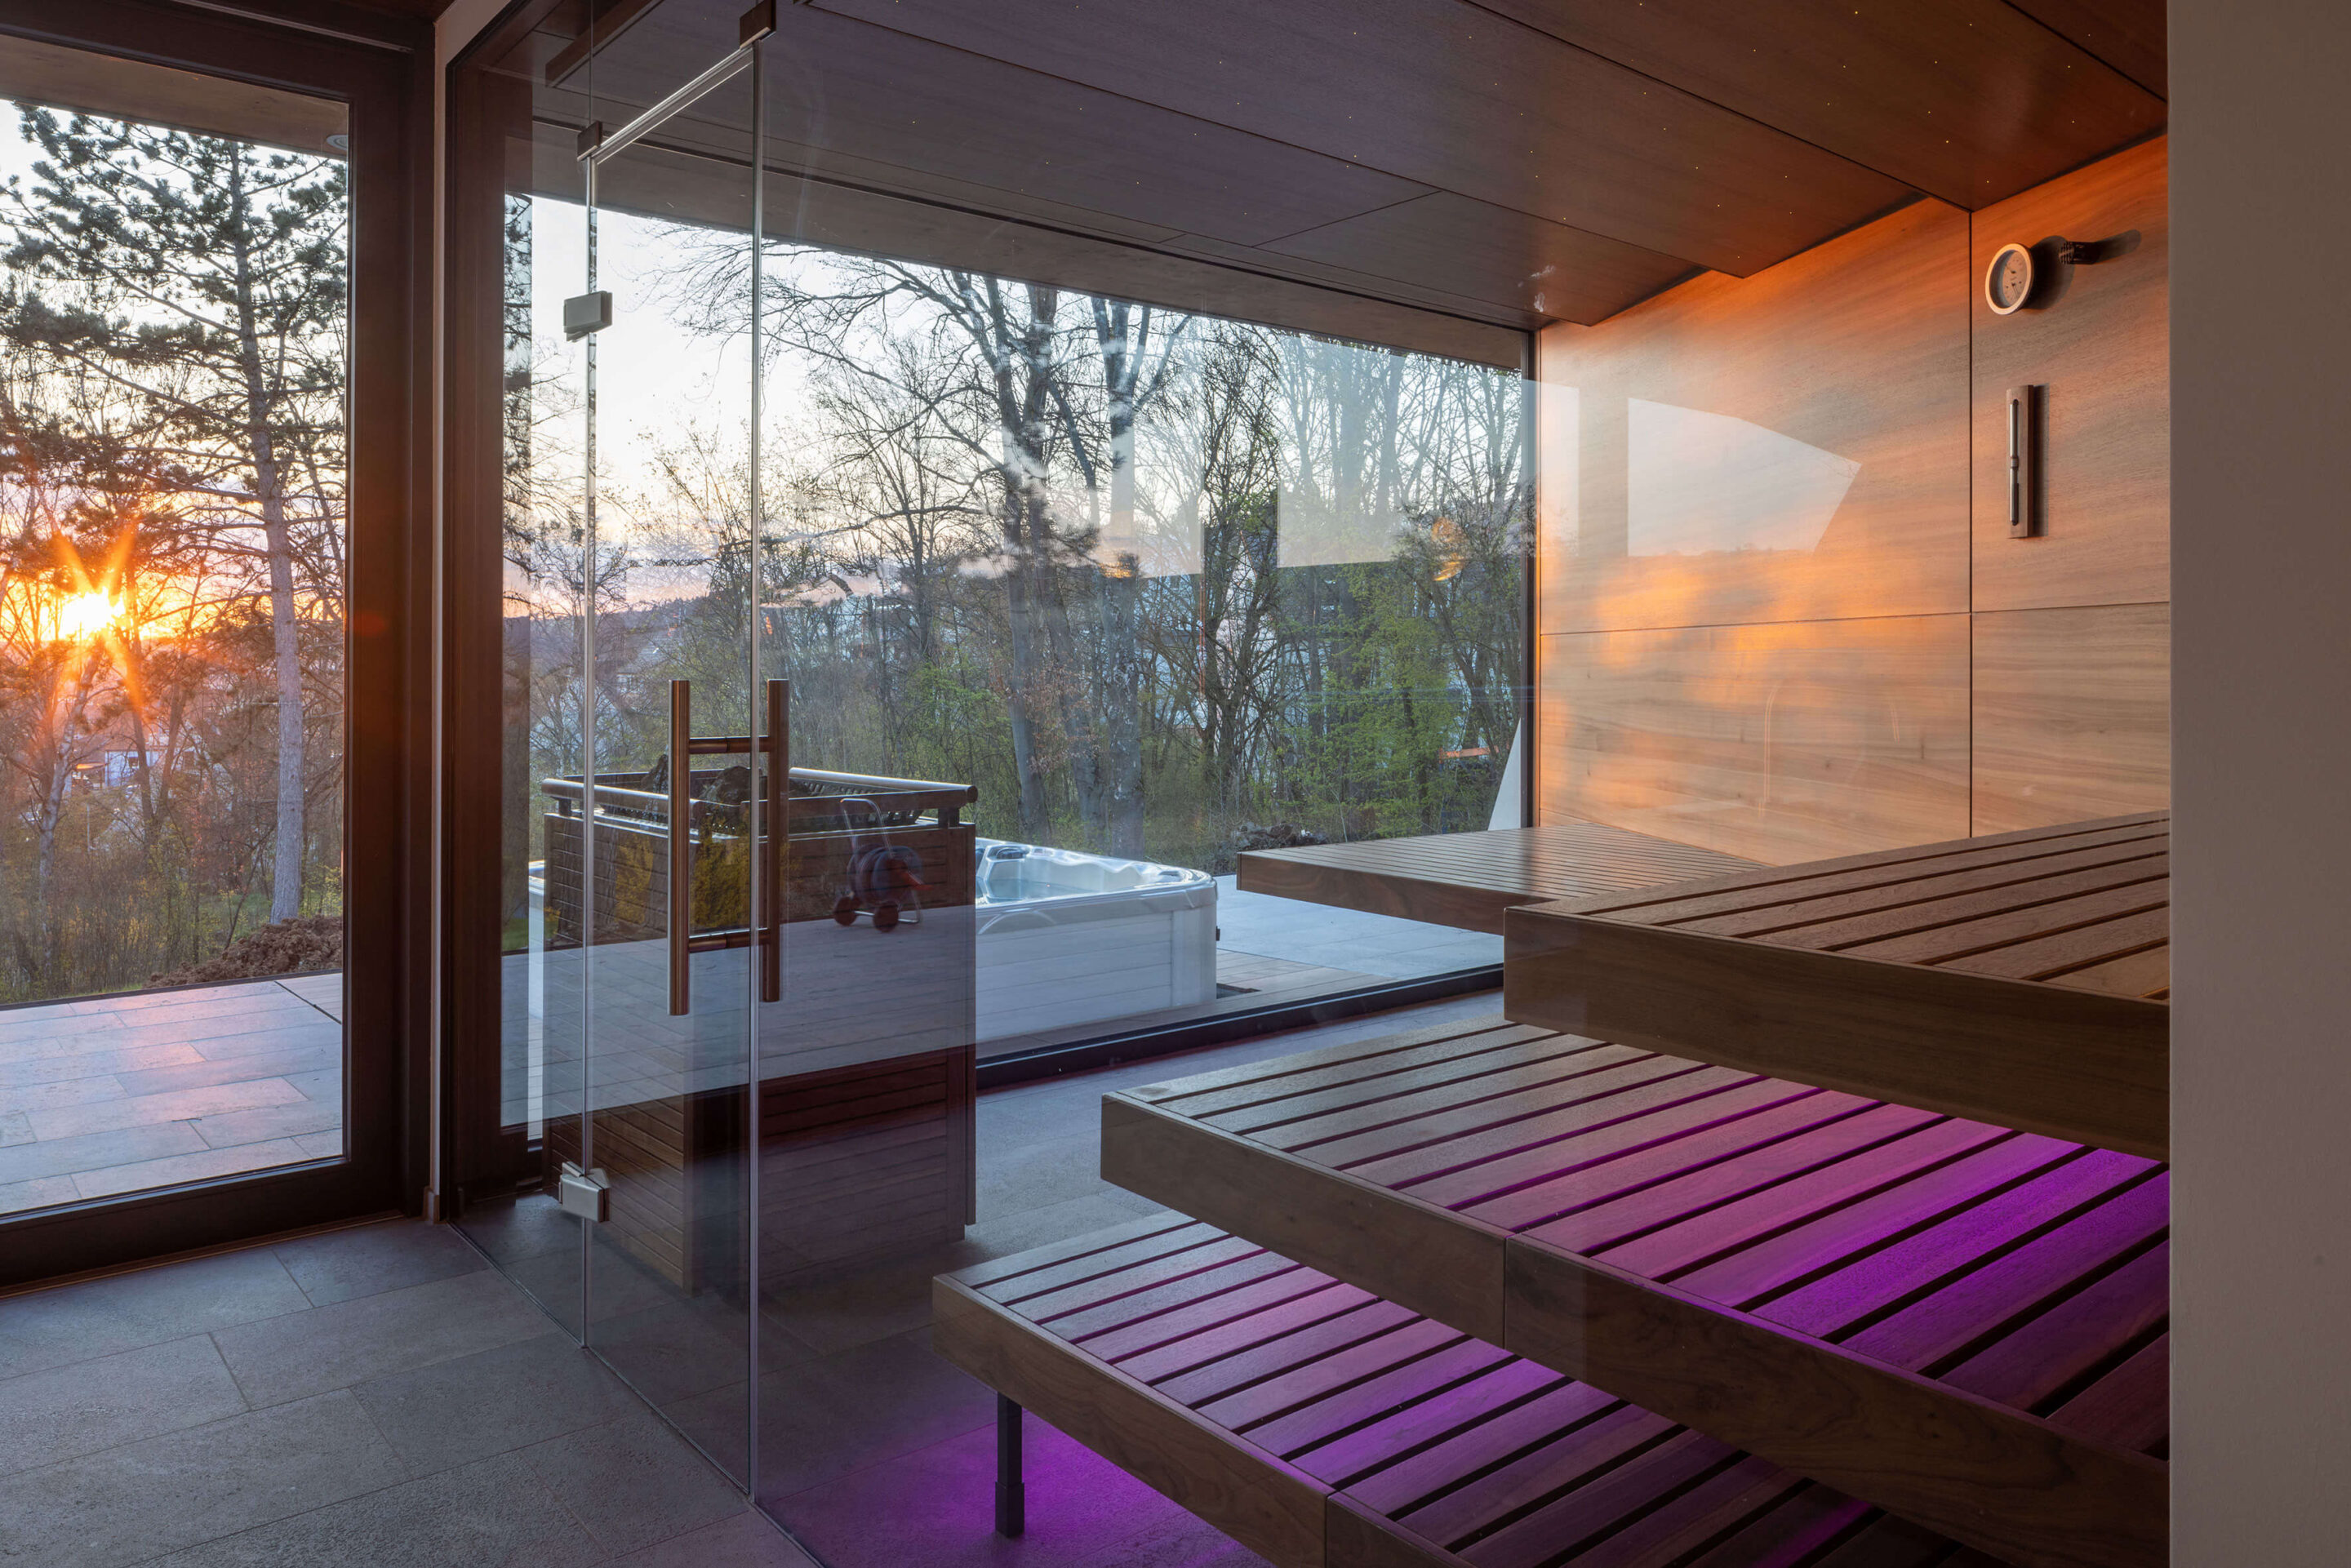 Complete wellness oasis with sauna, steam bath, and anteroom